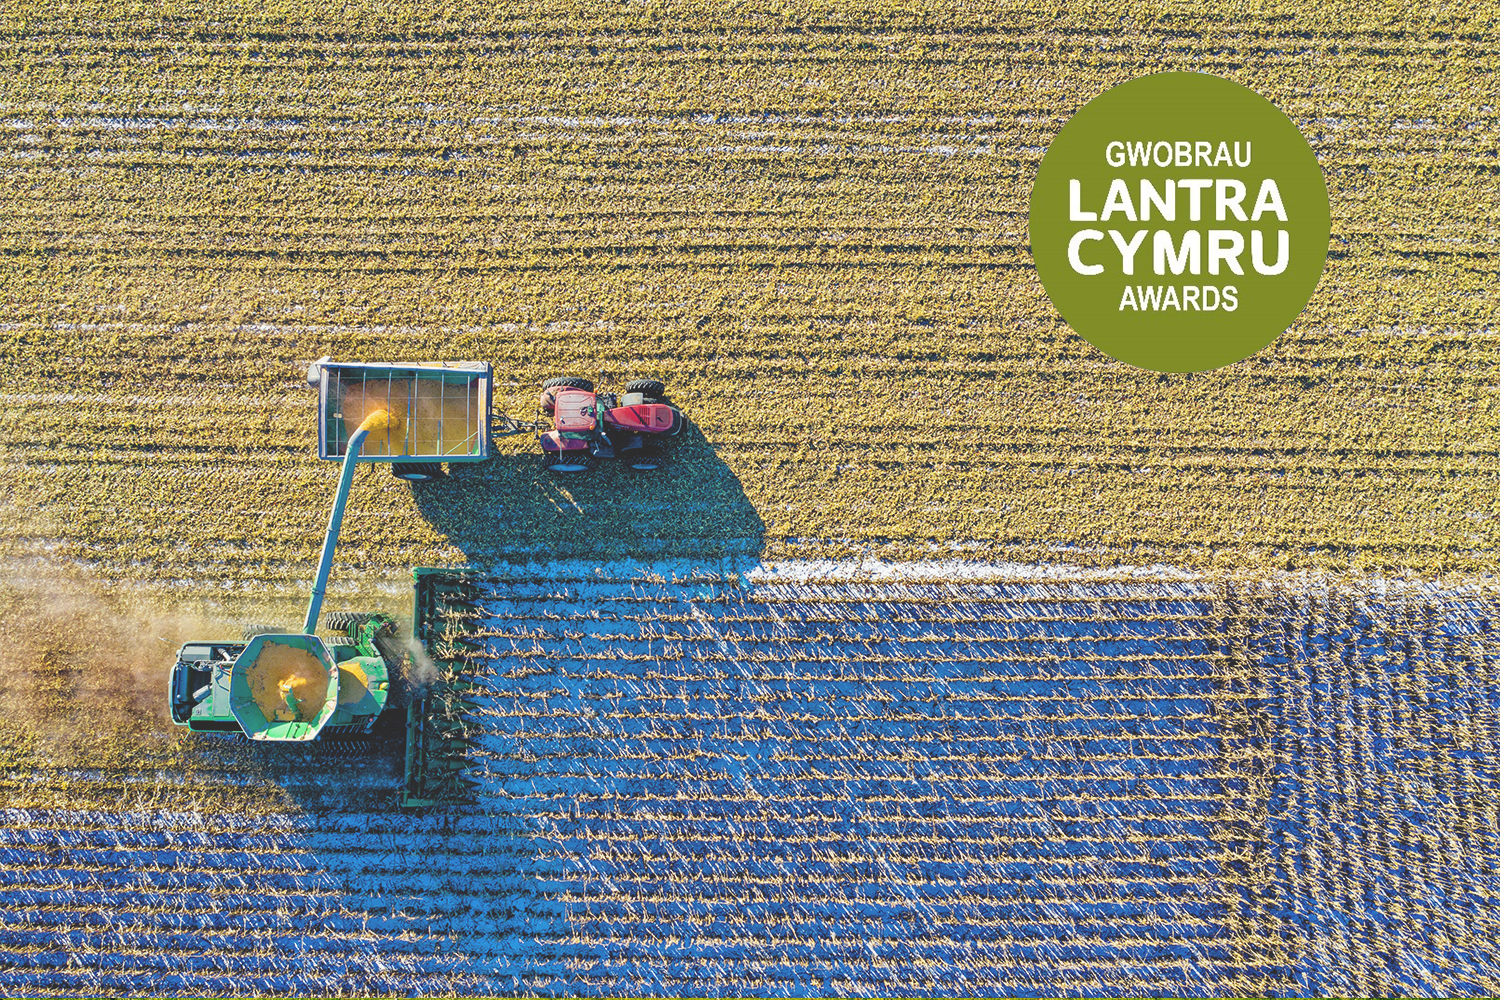 Lantra Cymru Awards 2020 logo with tractor